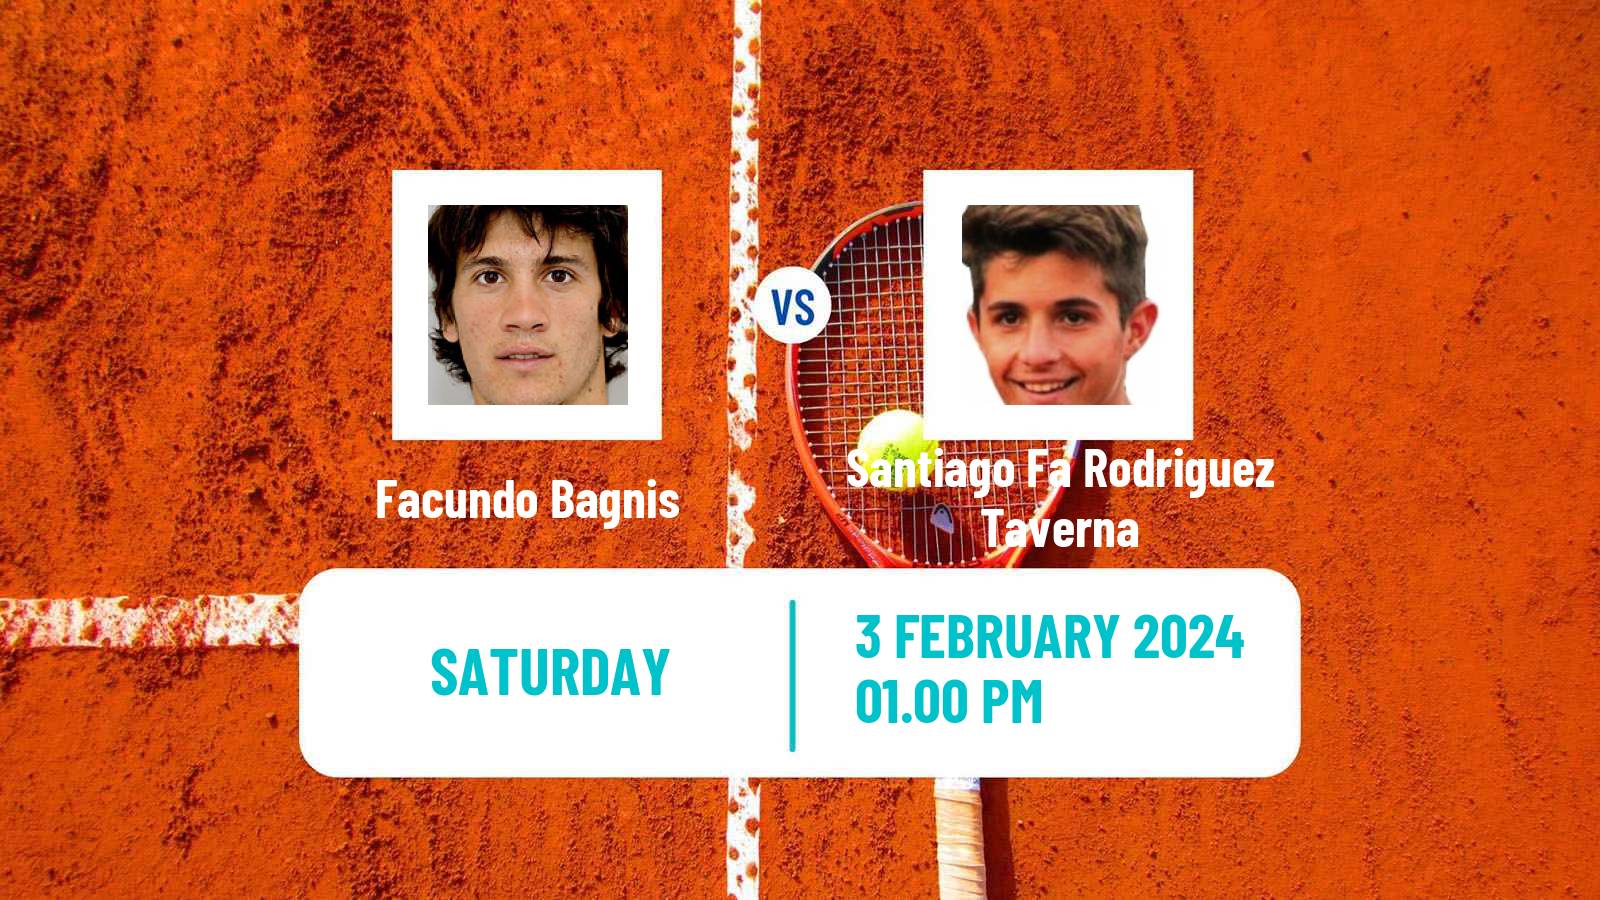 Tennis ATP Cordoba Facundo Bagnis - Santiago Fa Rodriguez Taverna